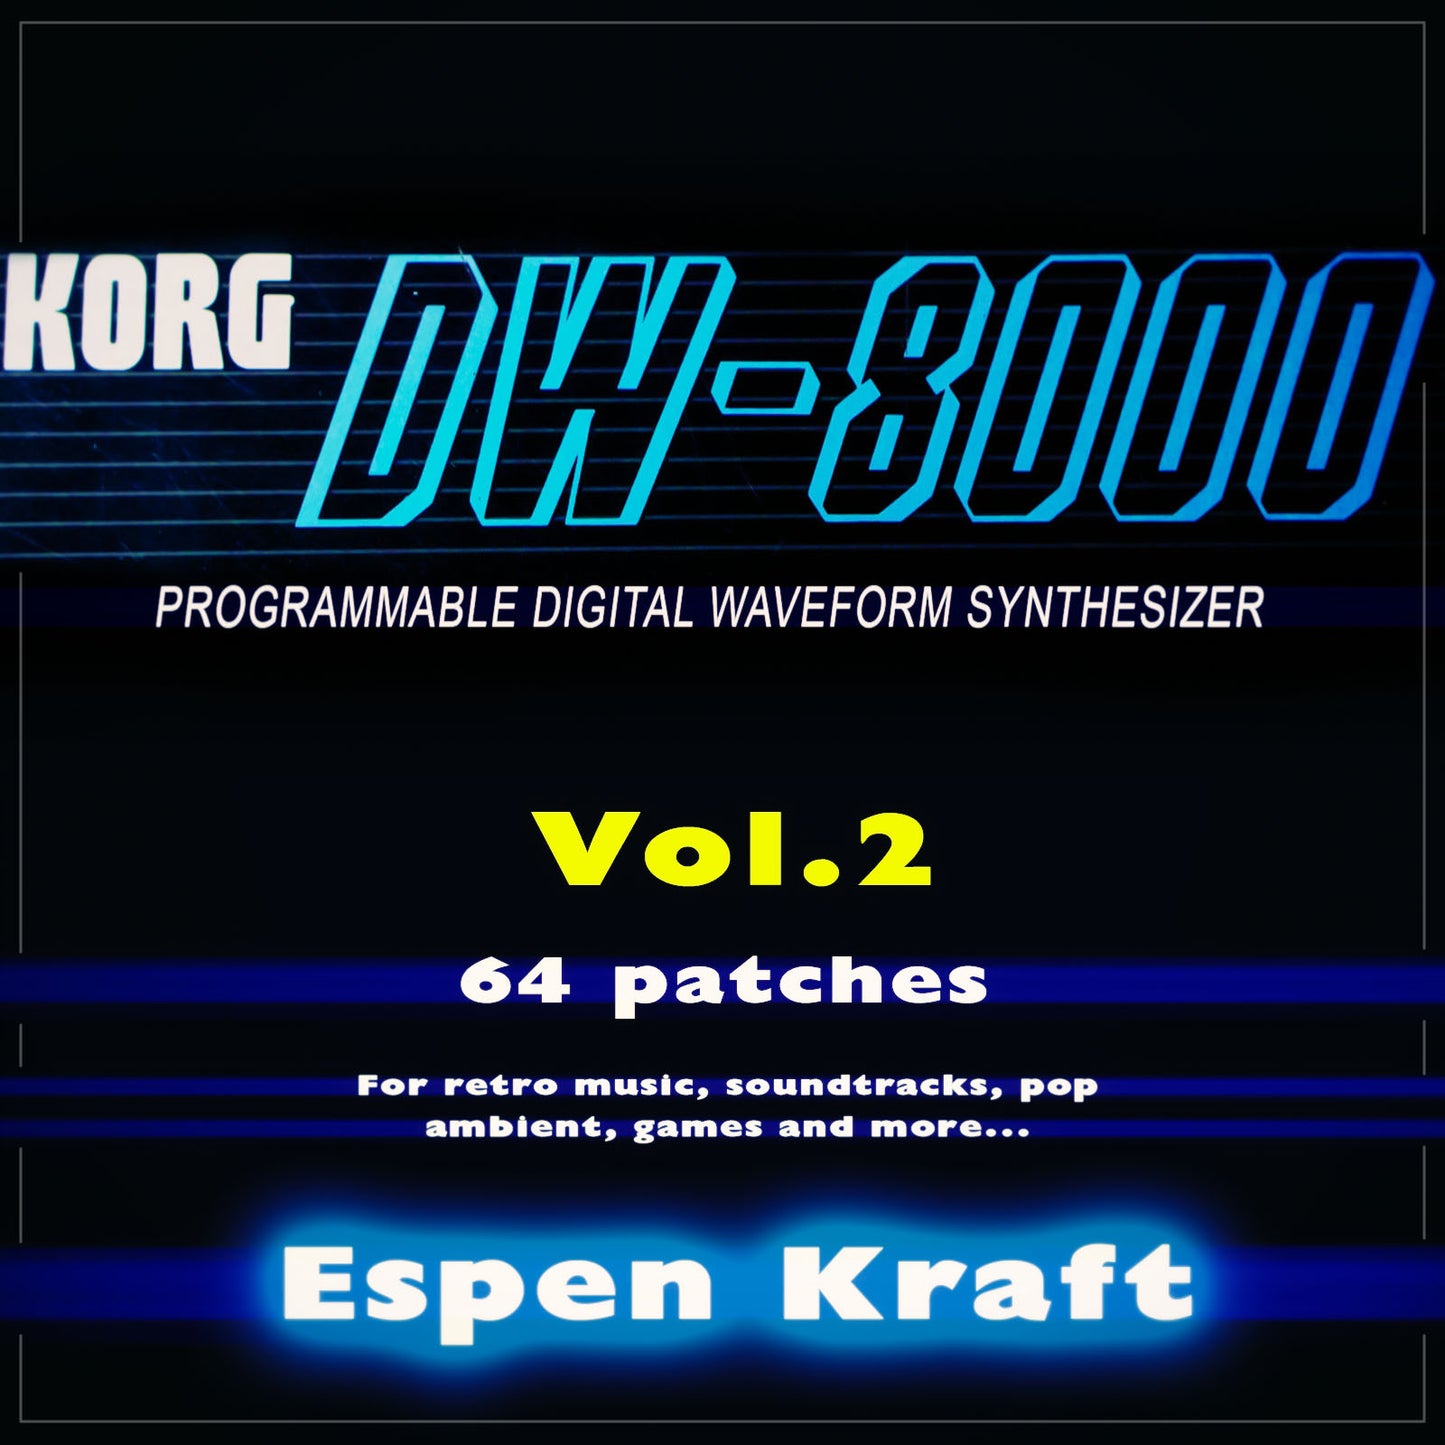 korg-dw8000-fb7999-vst-plugin-patch-bank